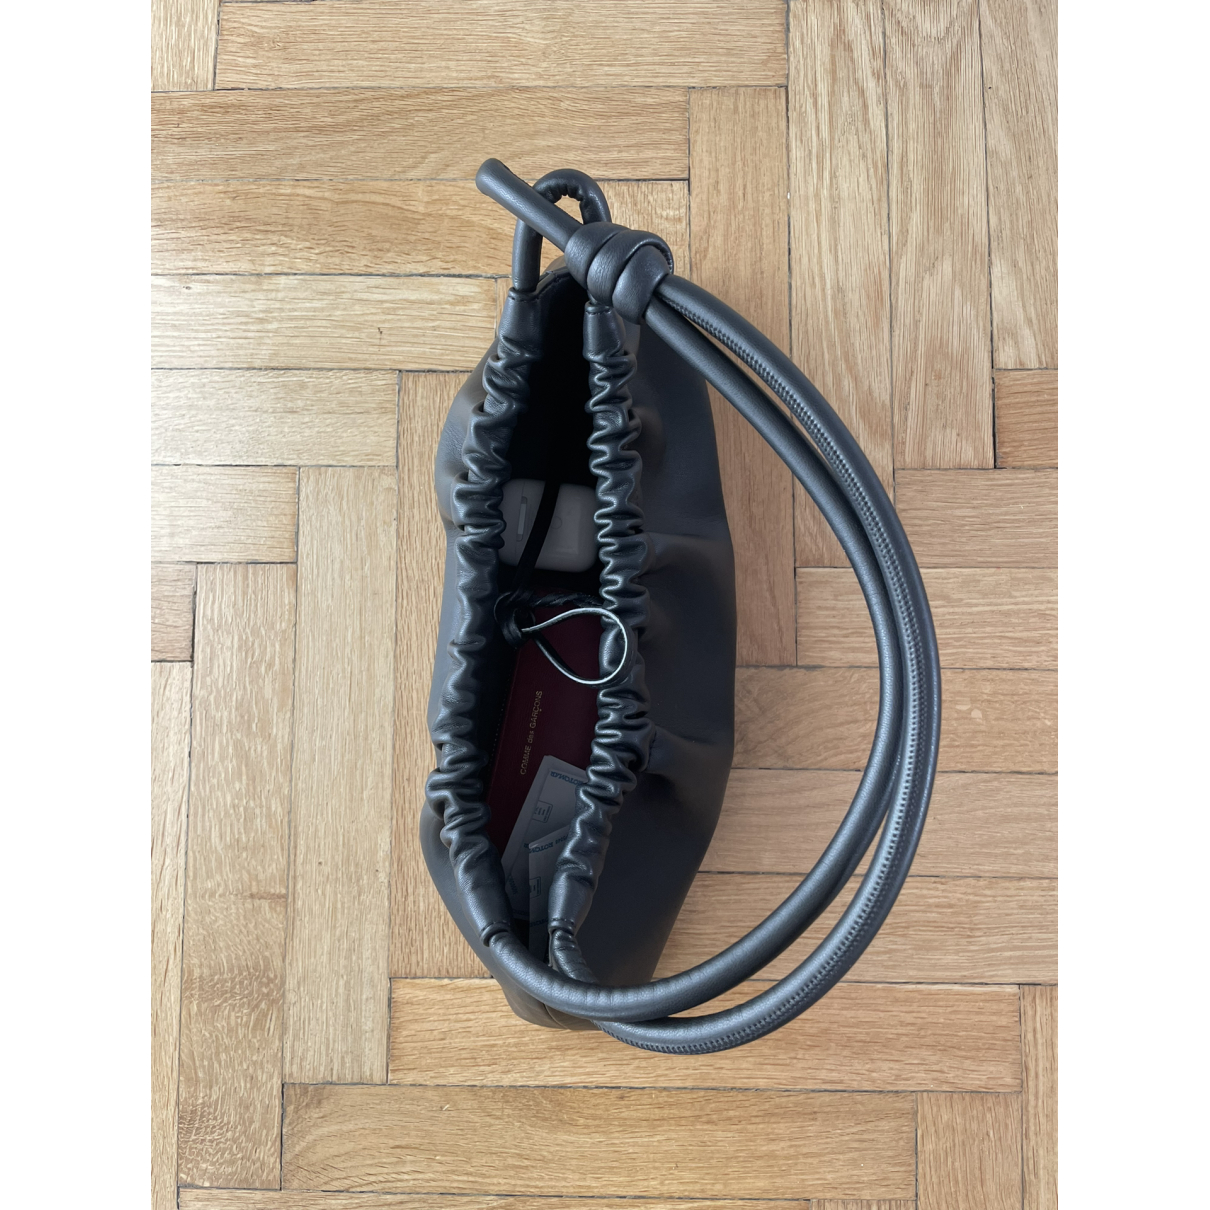 Black Trapeze Vegan Leather Handbag